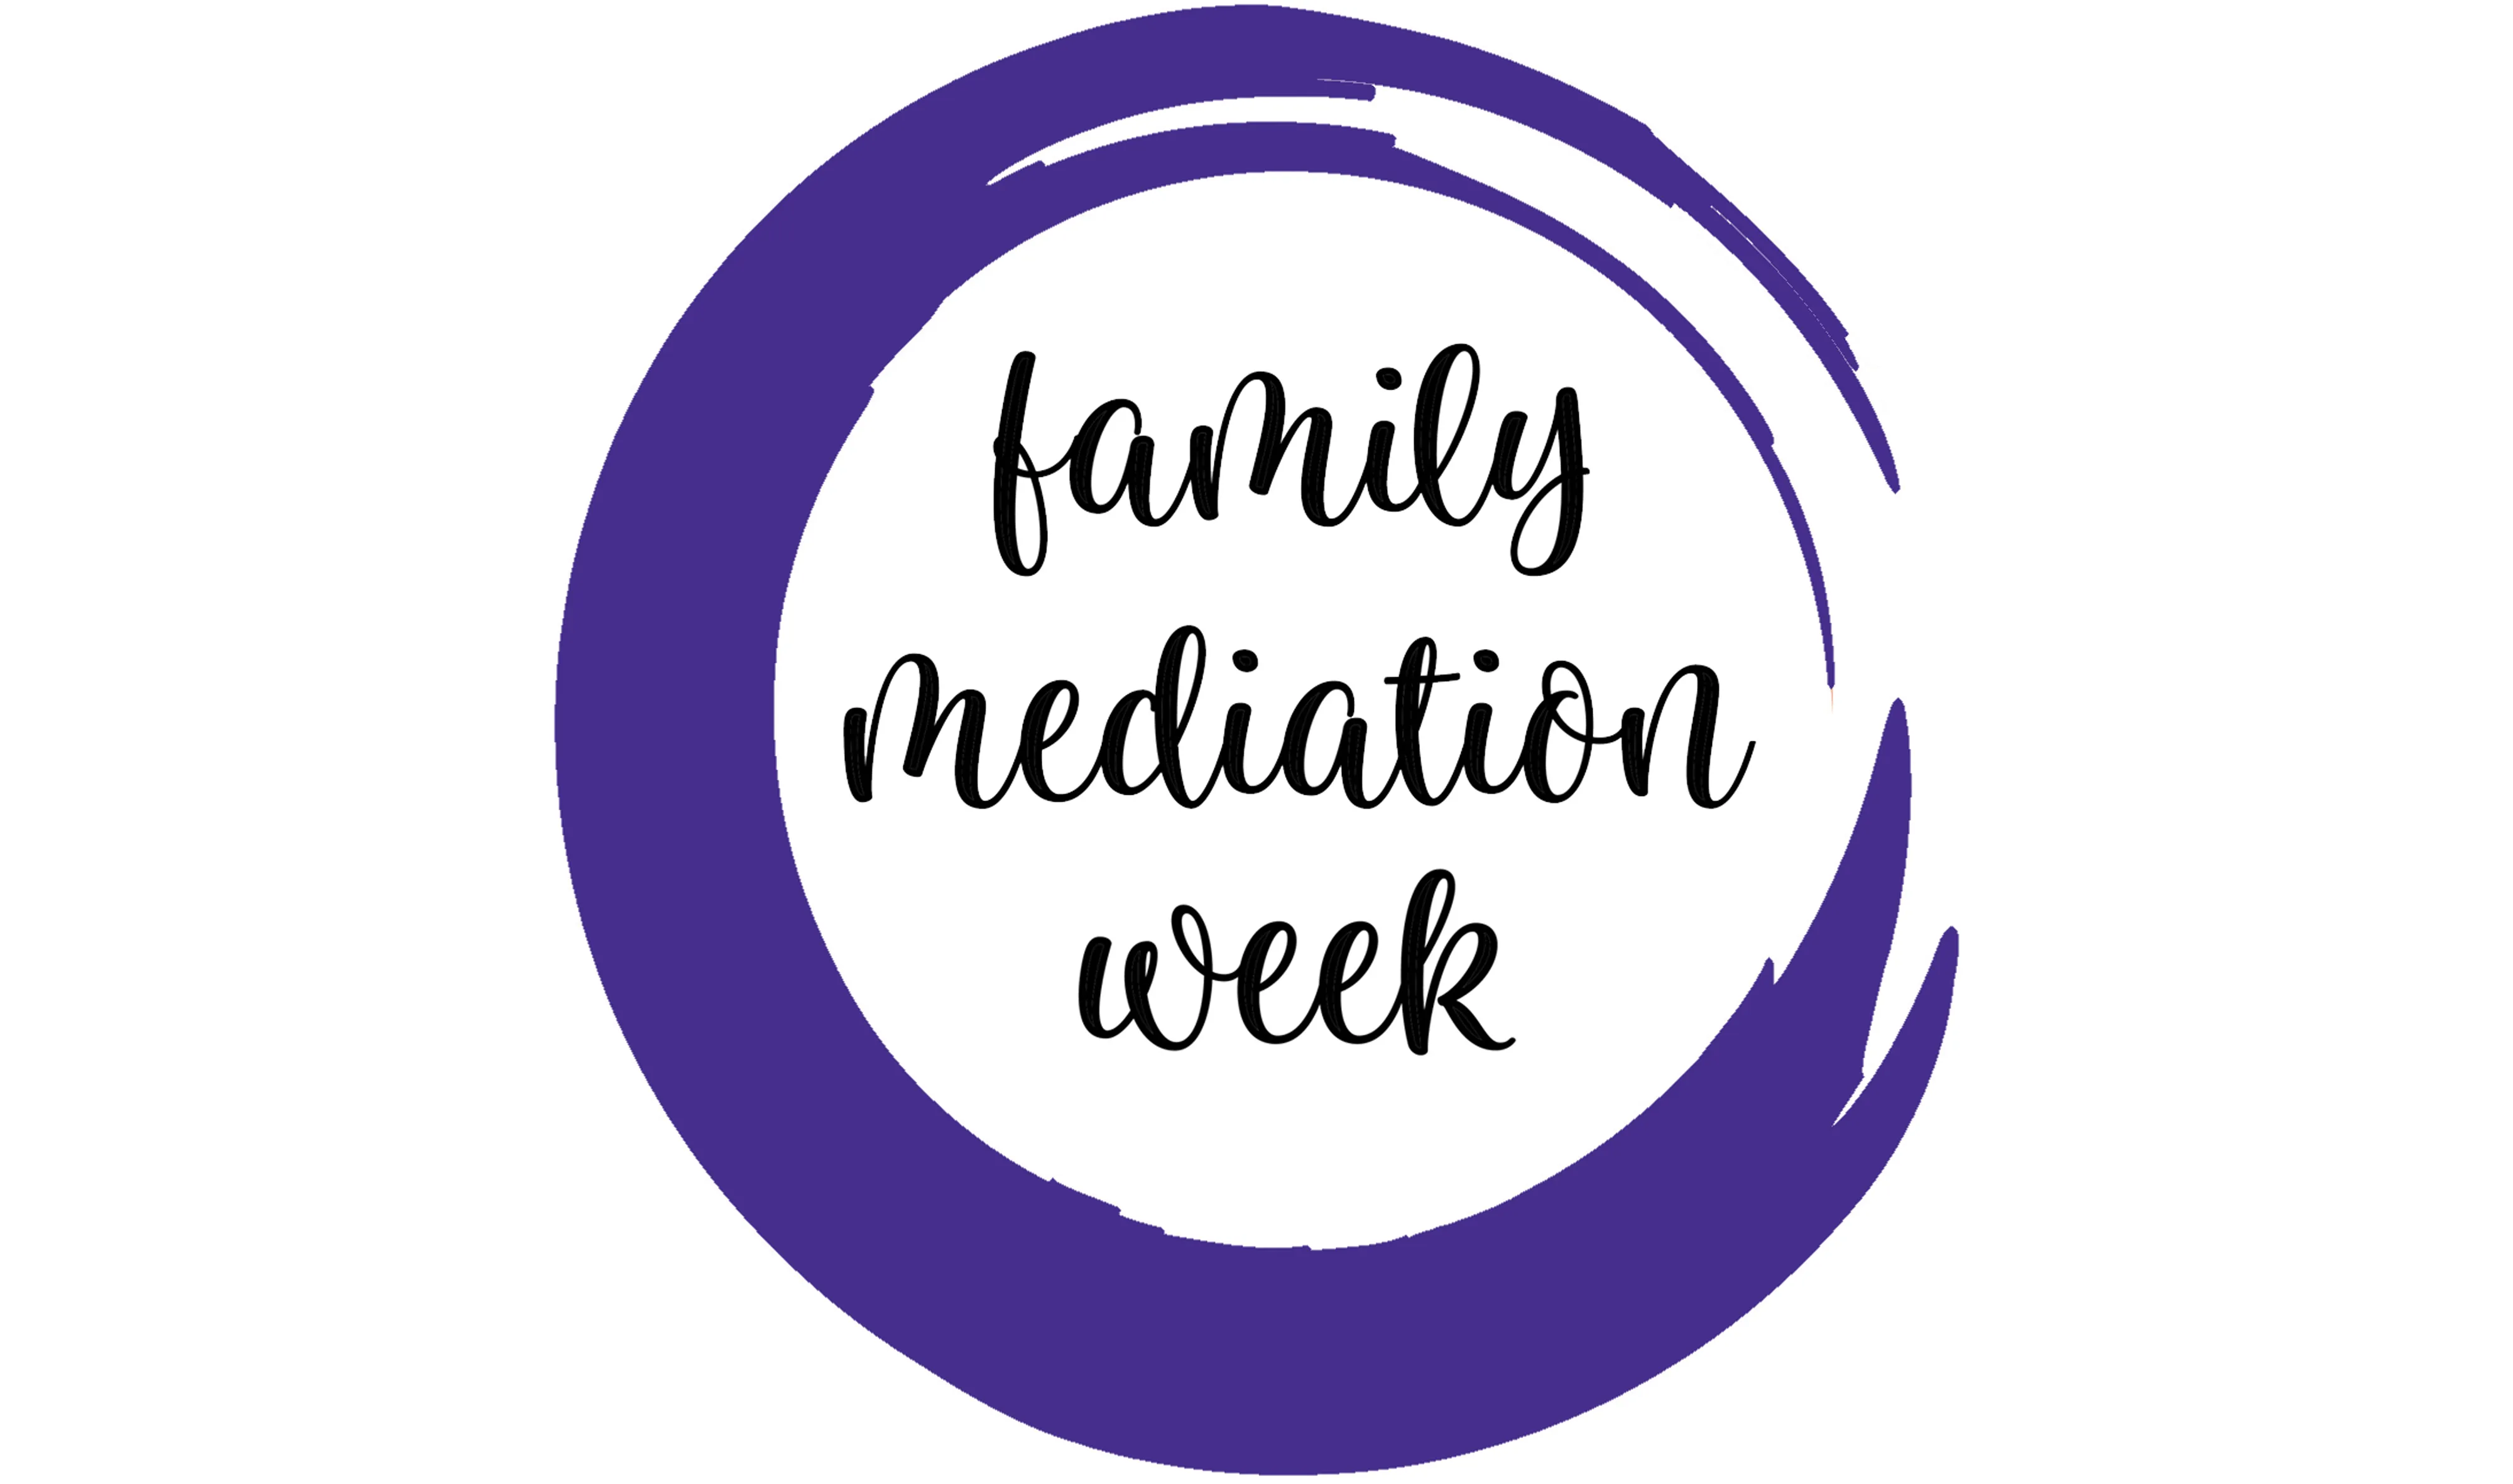 Family Mediation Week 2024